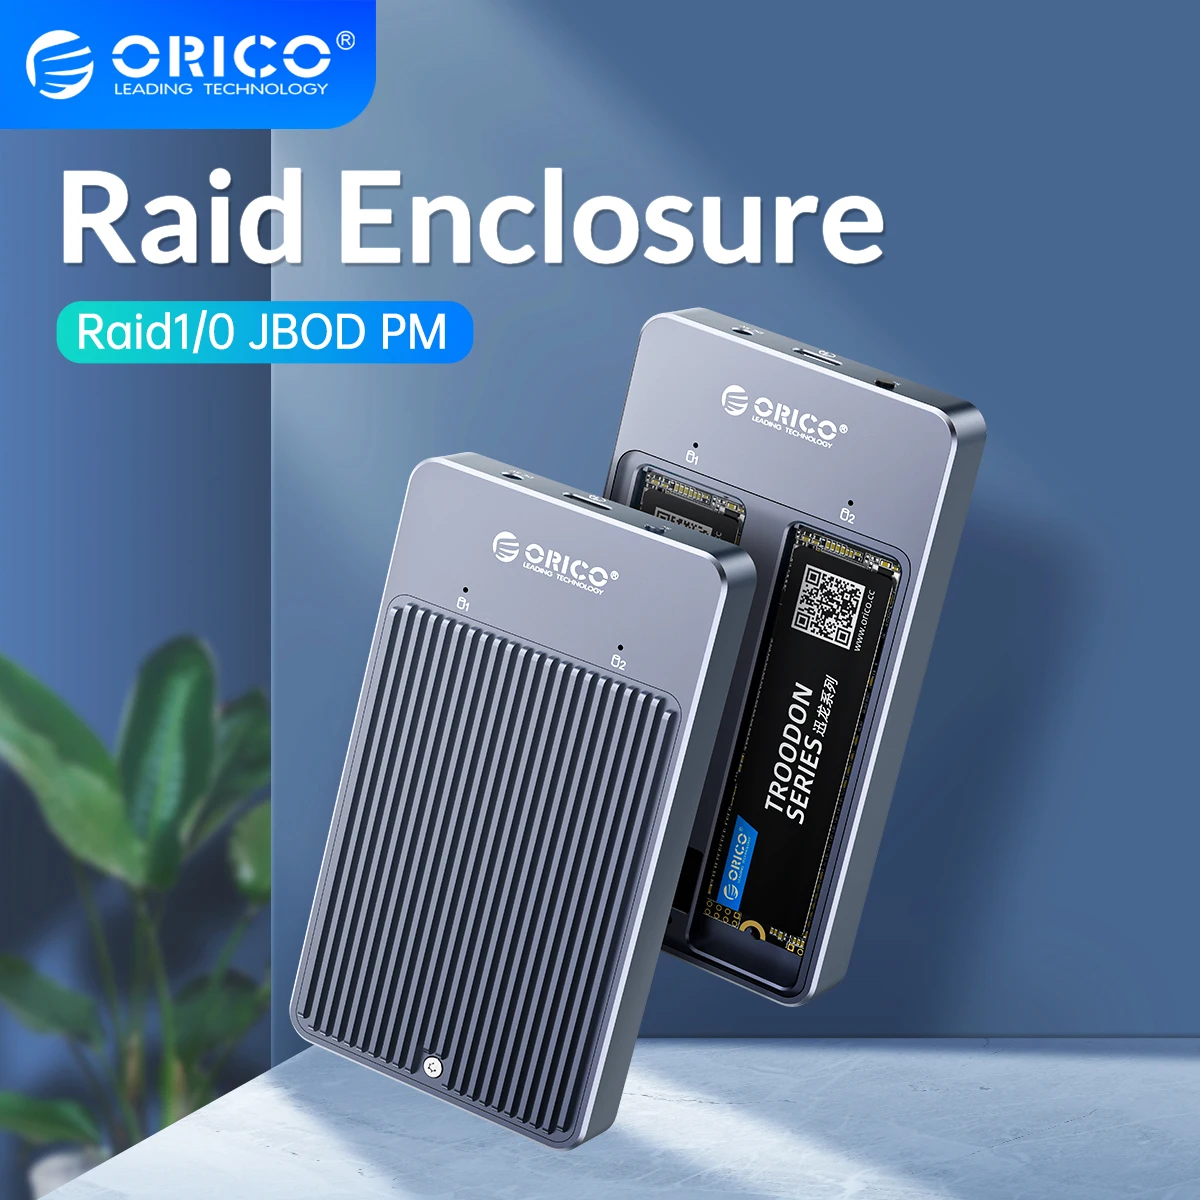 ORICO LSDT RAID Dual Bay M2 SSD Case Support M.2 NGFF SATA SSD Disk For B Key & B+M Key SSD Support PM/RAID 0/RAID 1/JBOD Mode